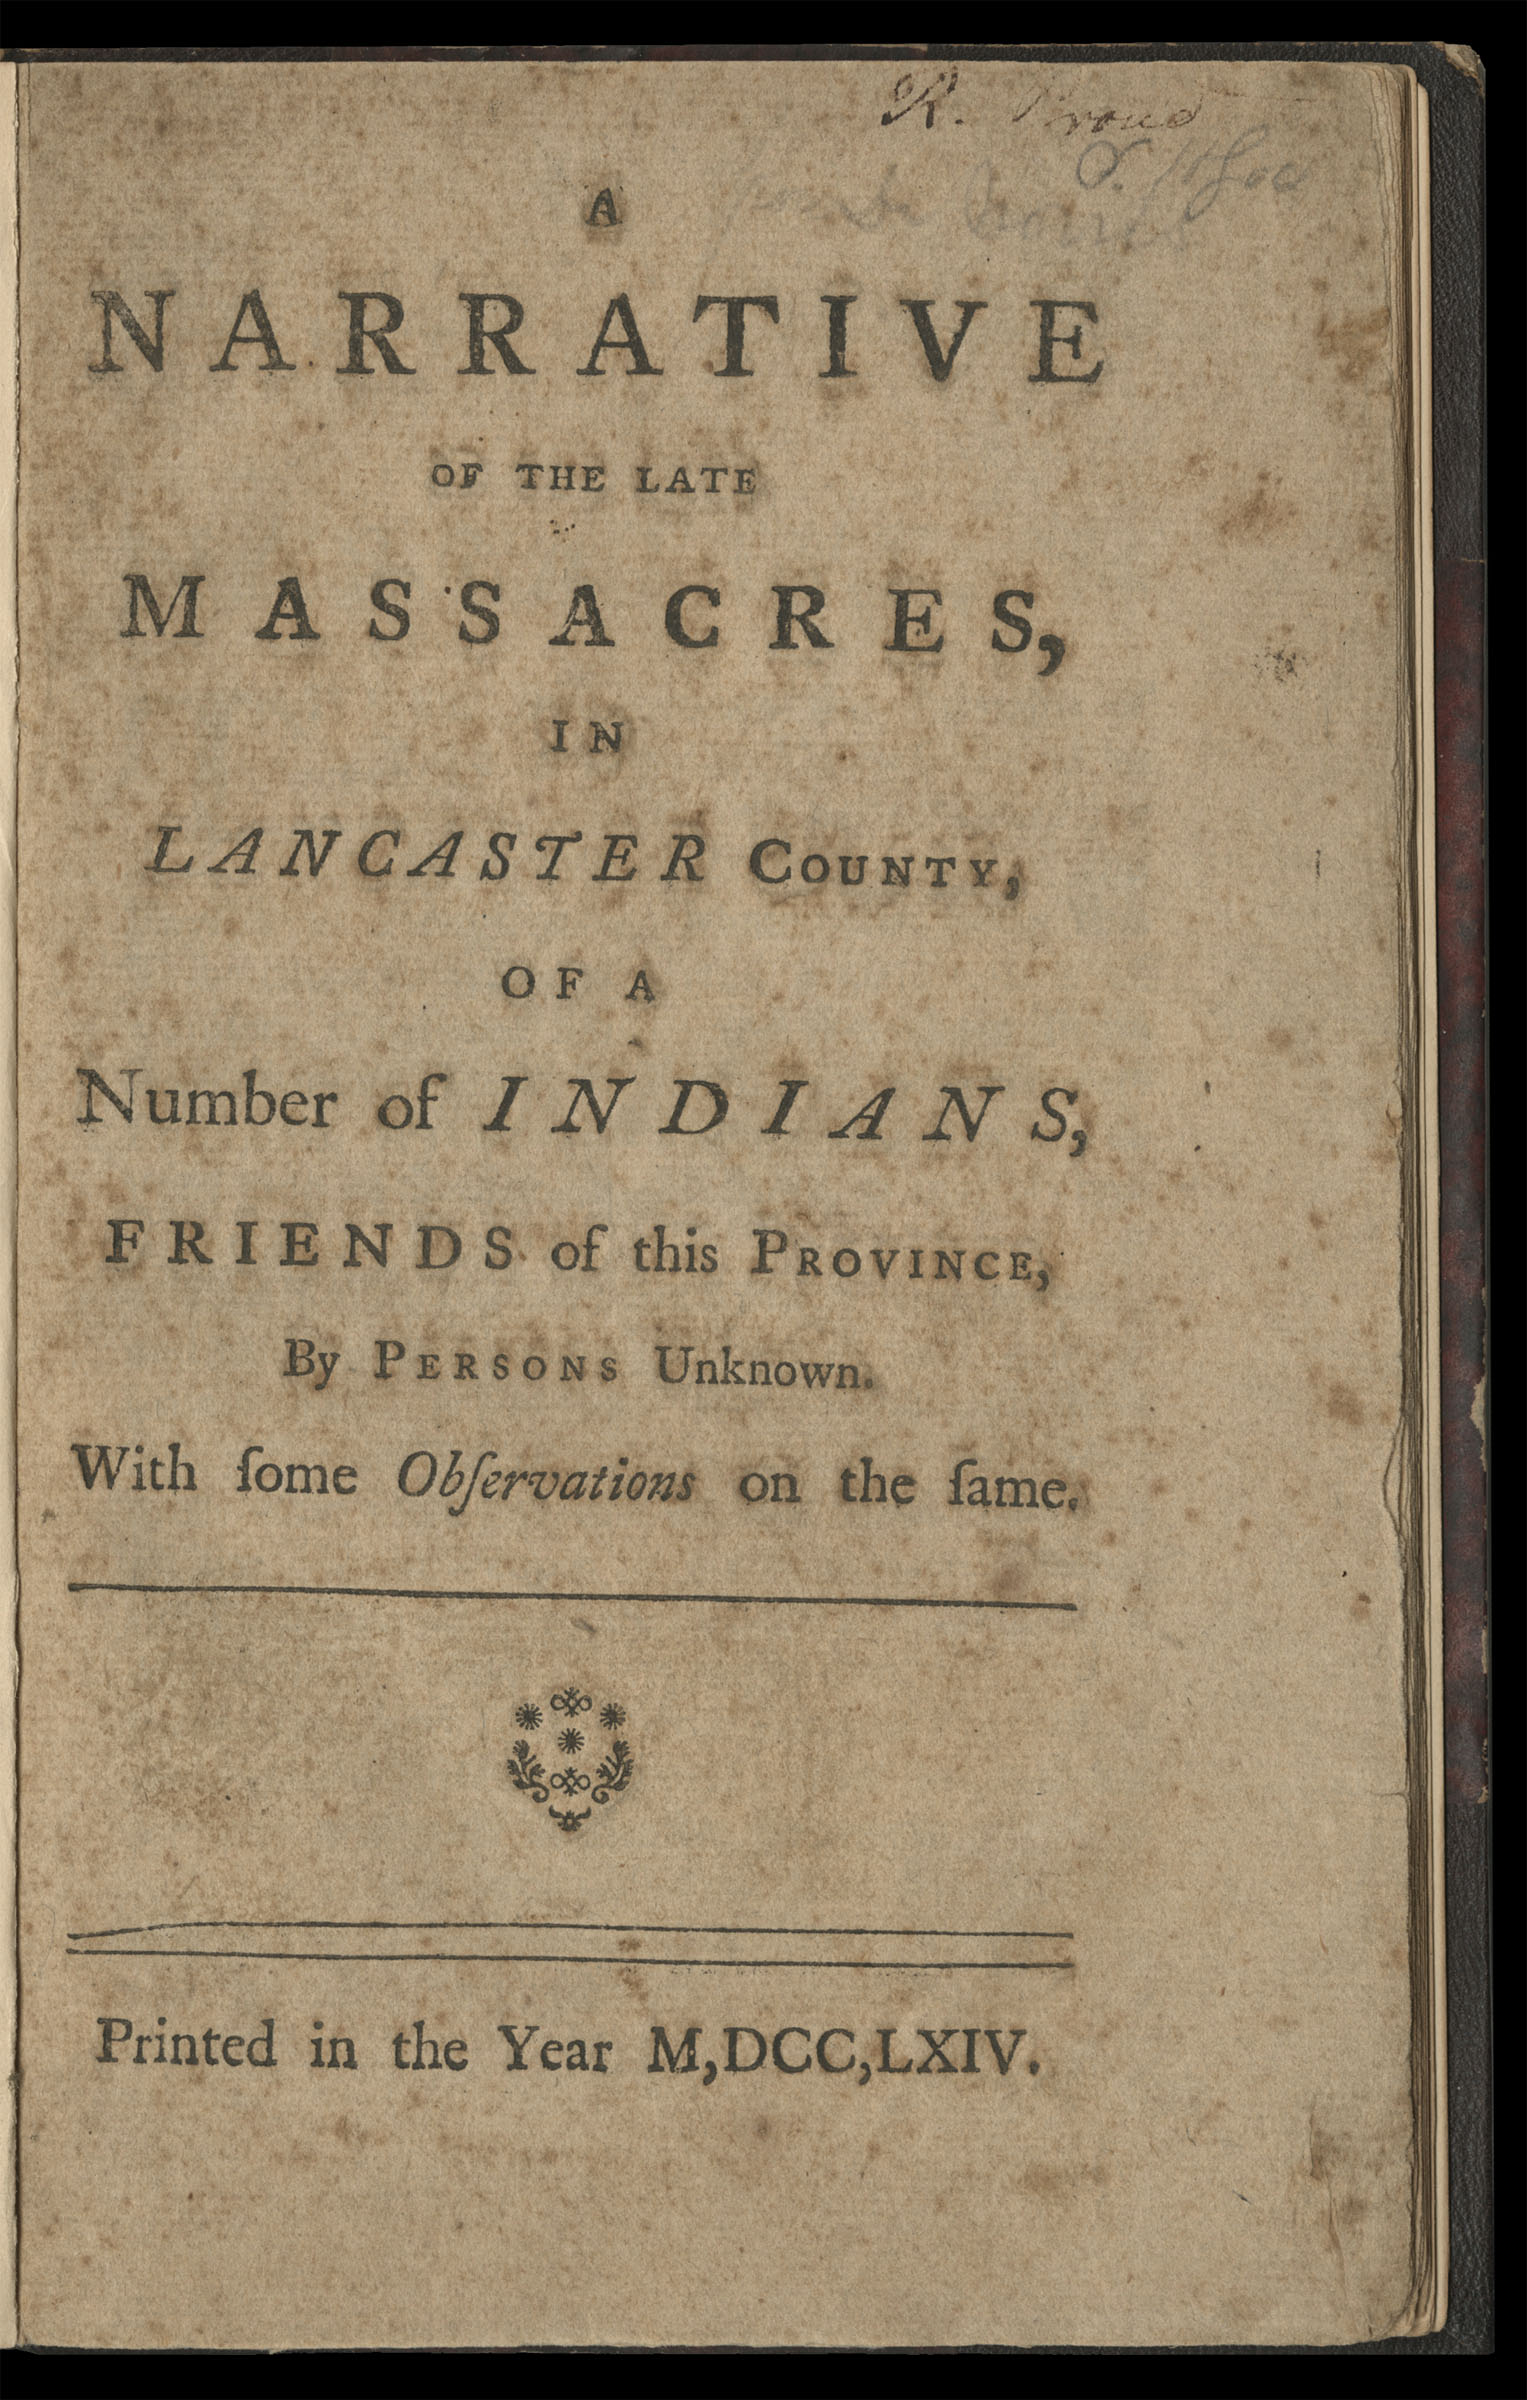 A Late of the Narrative Massacres